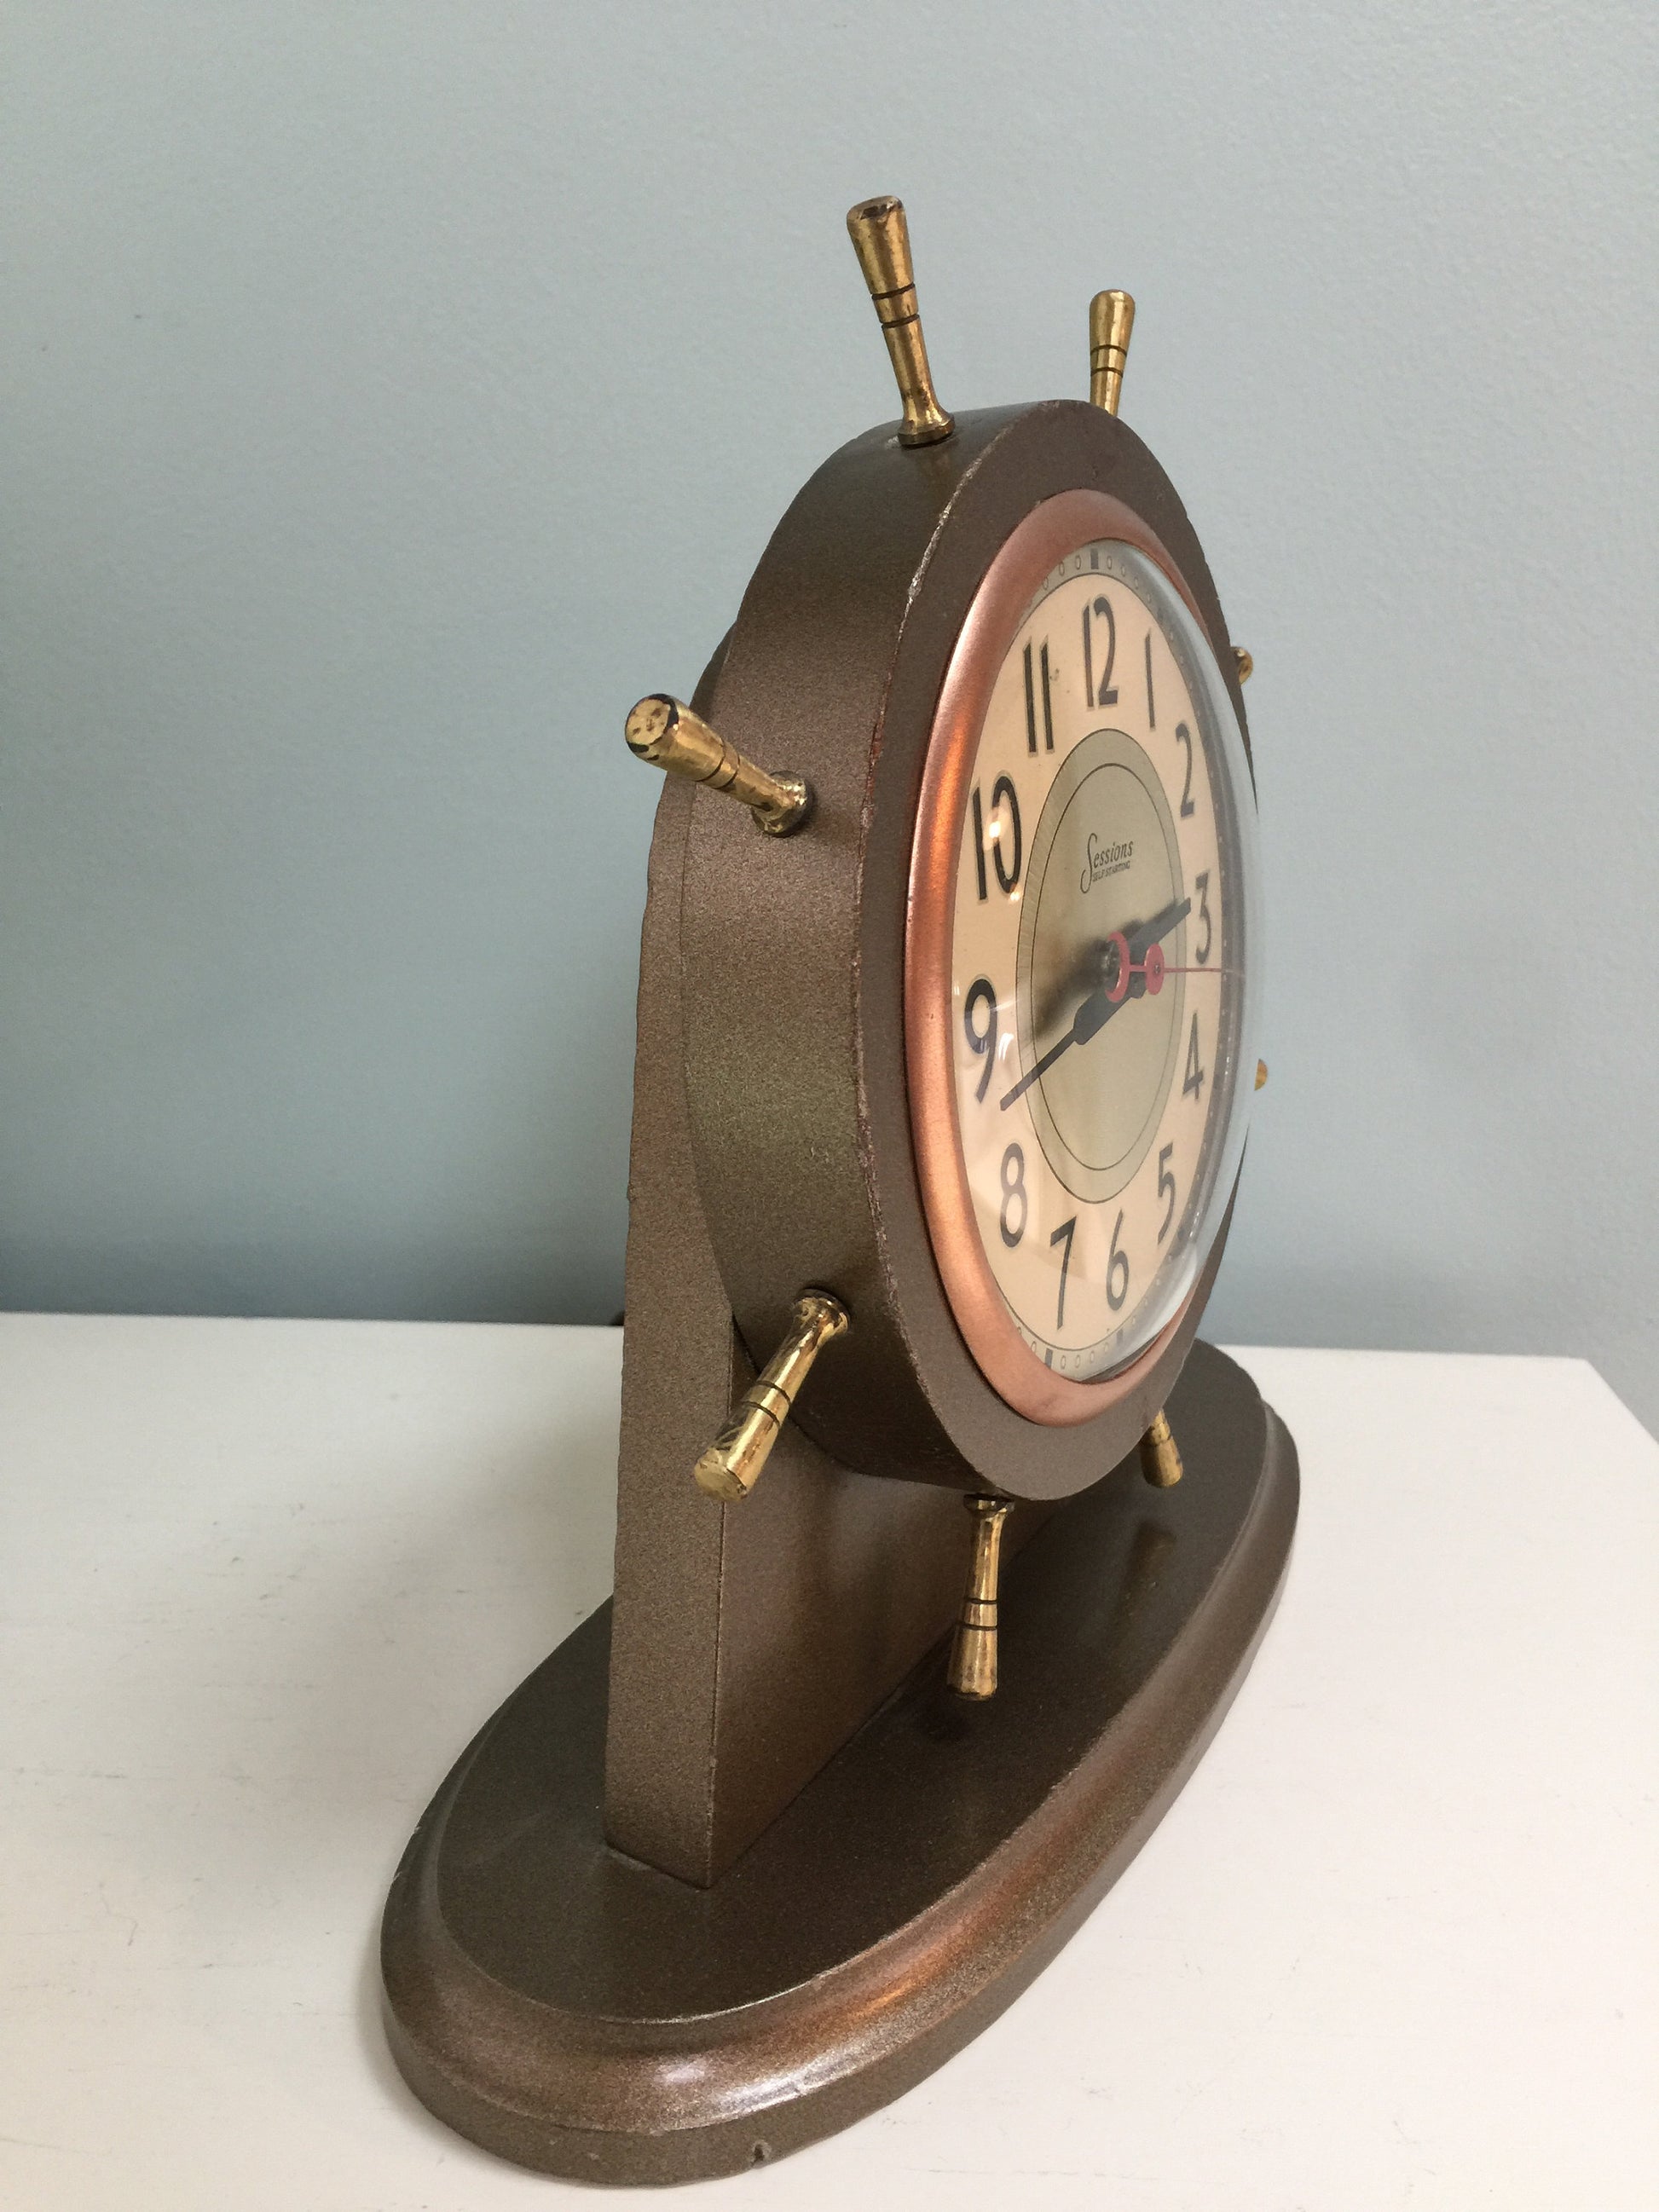 Vintage Nautical Clock, Sessions Ships Wheel, Wood Shelf Clock – Duckwells